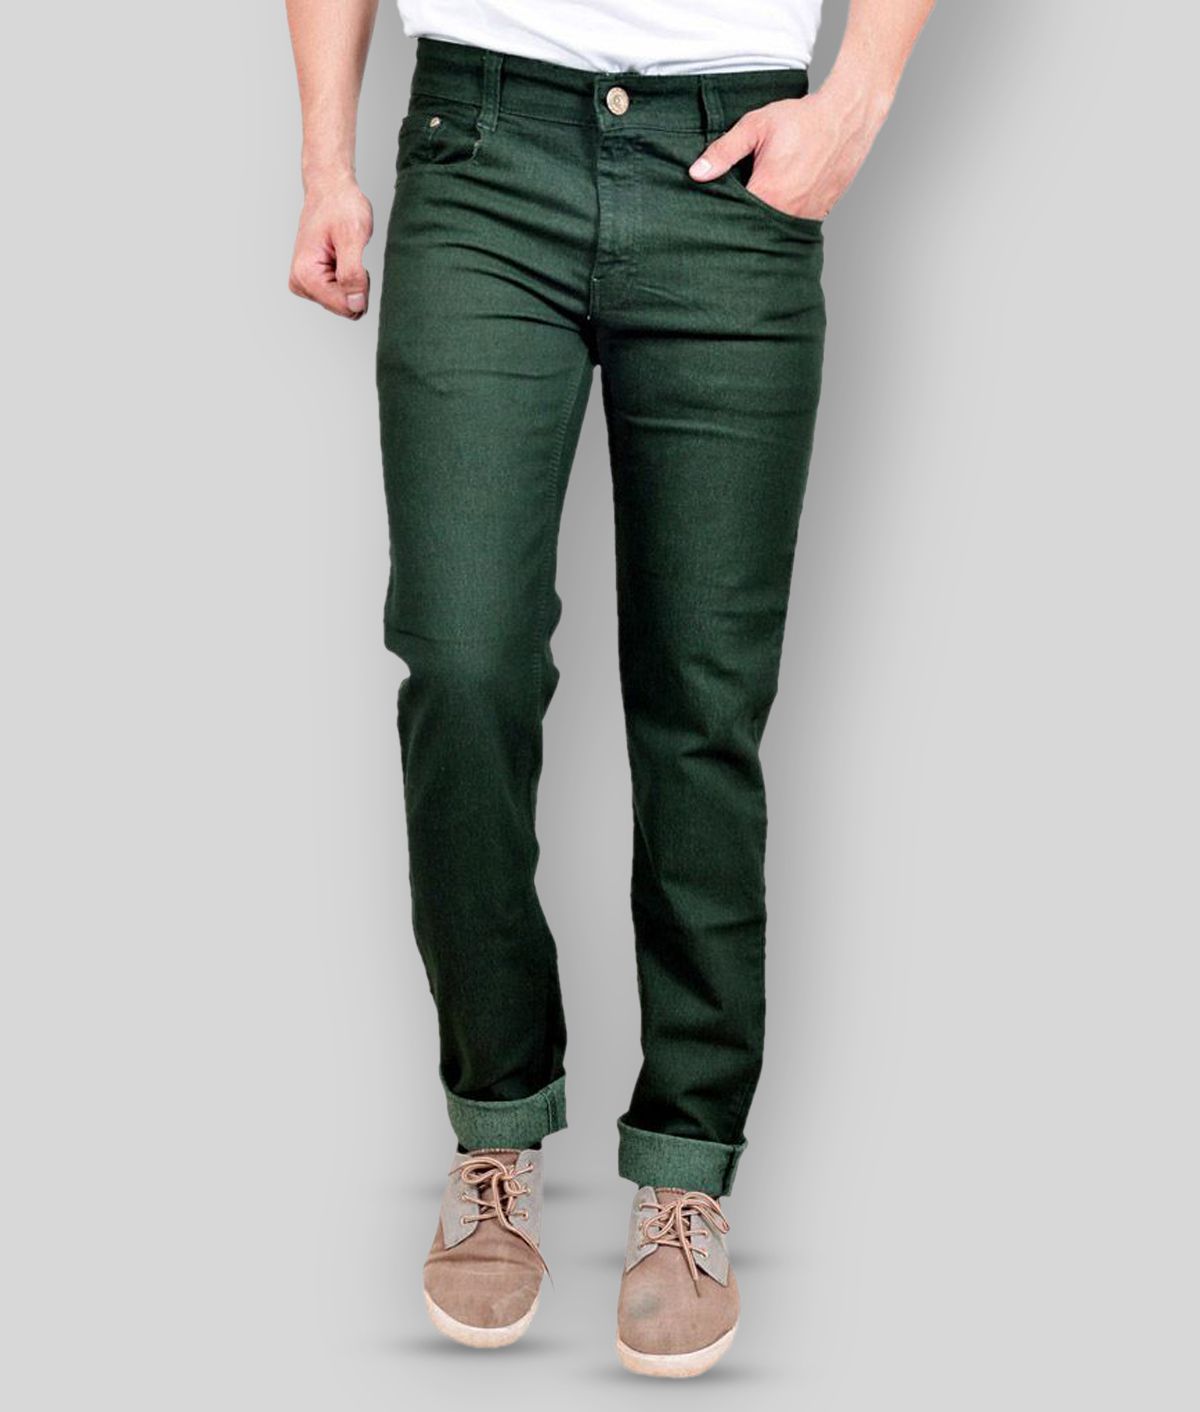 Studio Nexx - Green 100% Cotton Regular Fit Men's Jeans ( Pack of 1 )